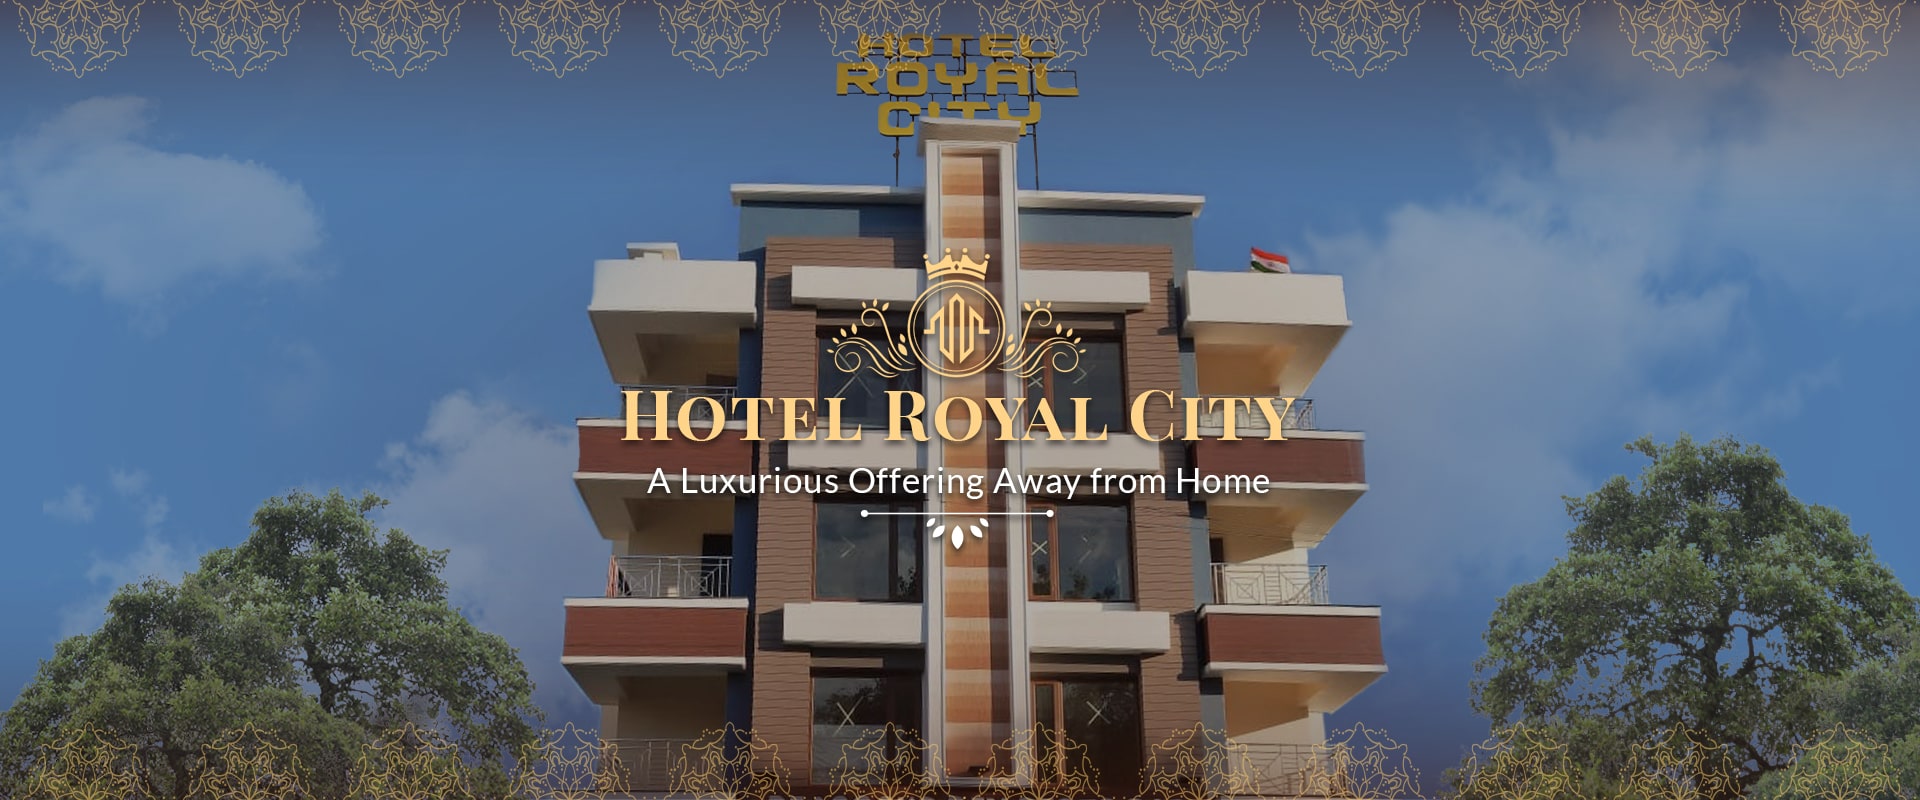 Hotel Royal City